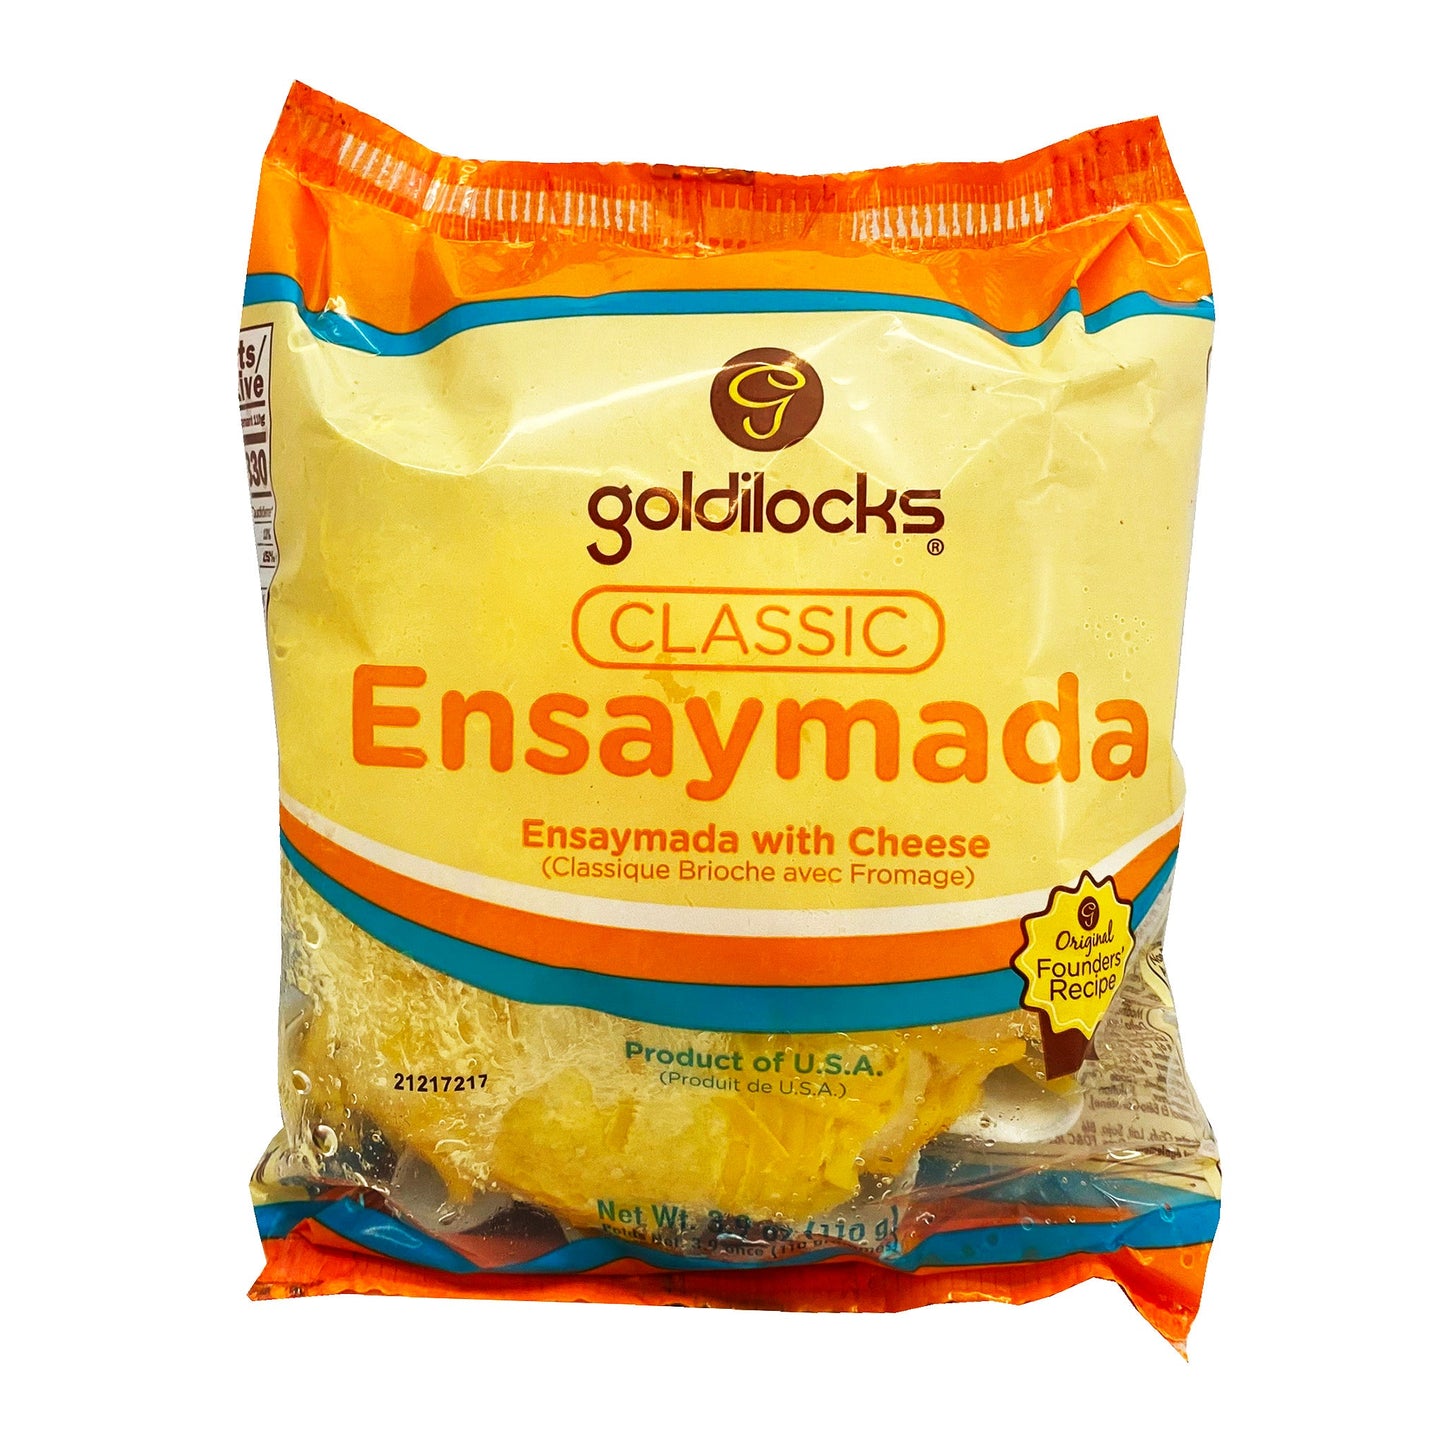 GOLDILOCKS ENSAYMADA WITH CHEESE CLASSIC